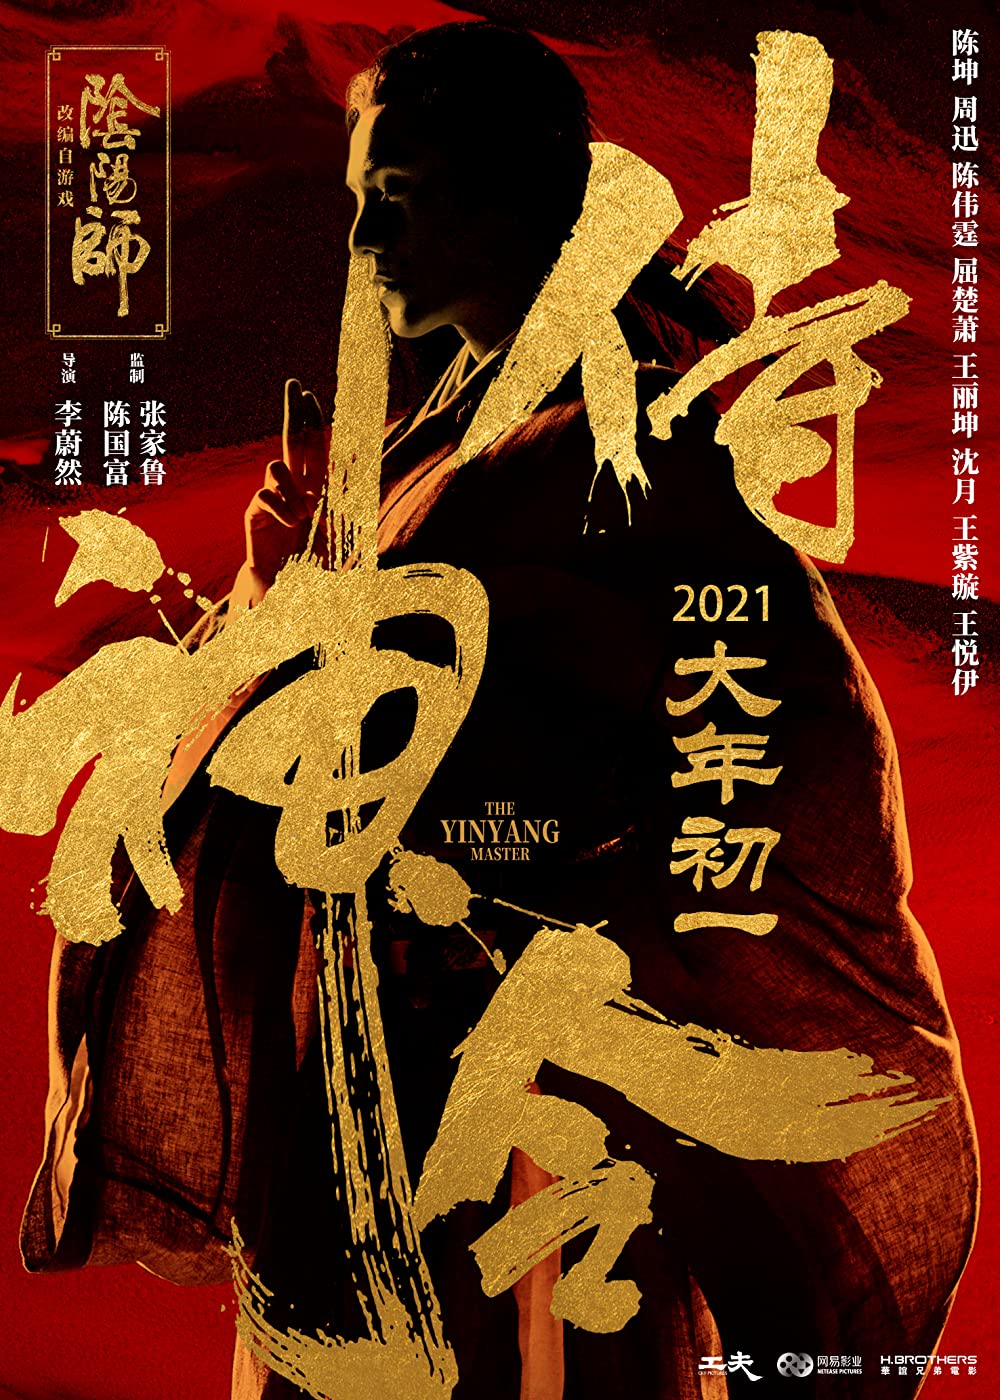 Filmbeschreibung zu The Yin Yang Master